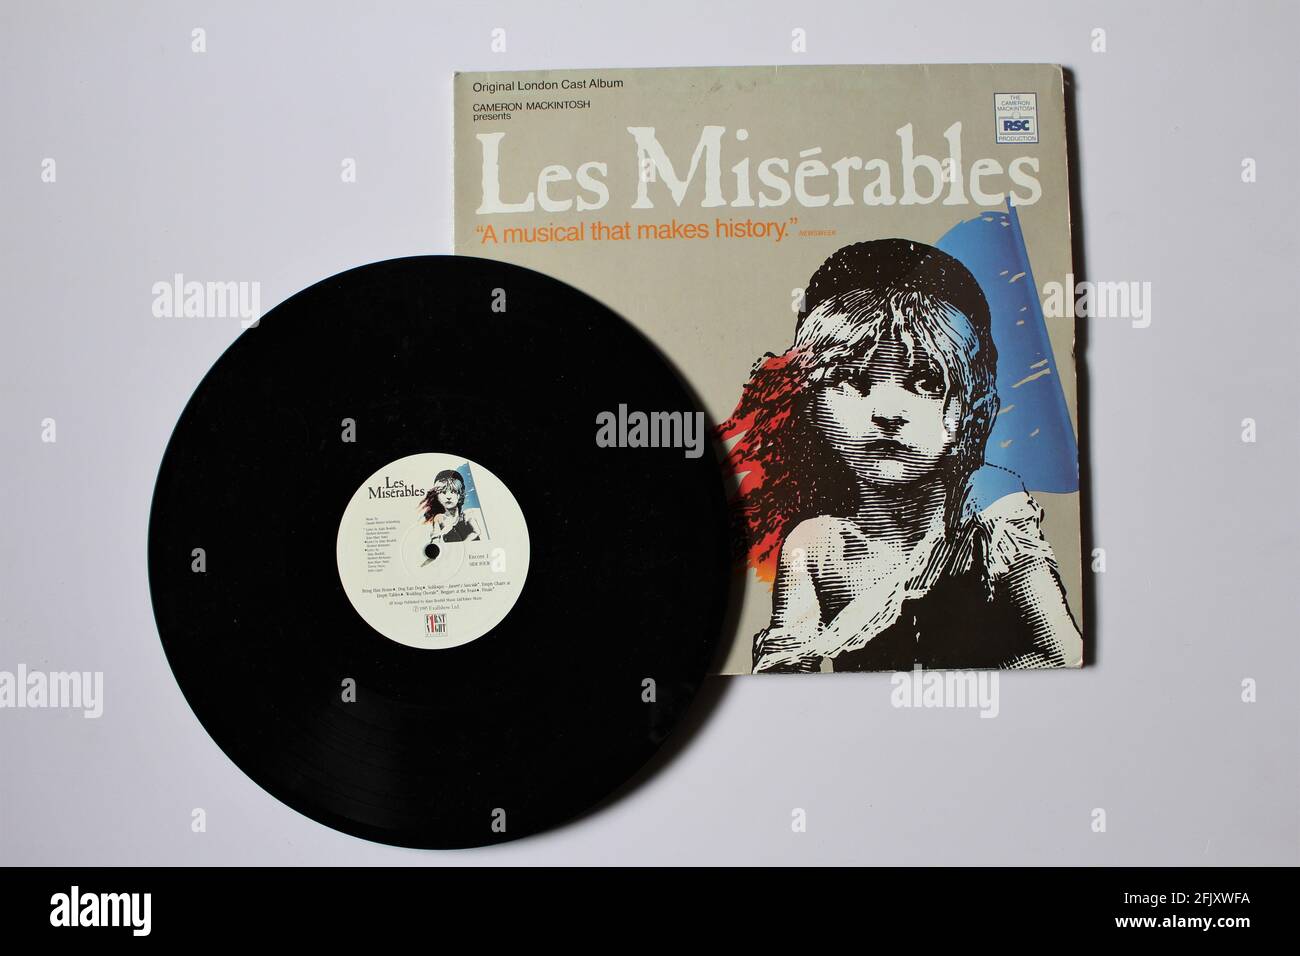 Les Misérables musikalisches, original Londoner Cast-Album, produziert von Cameron Mackintosh. Soundtrack auf Vinyl Schallplatte LP Album. Stockfoto